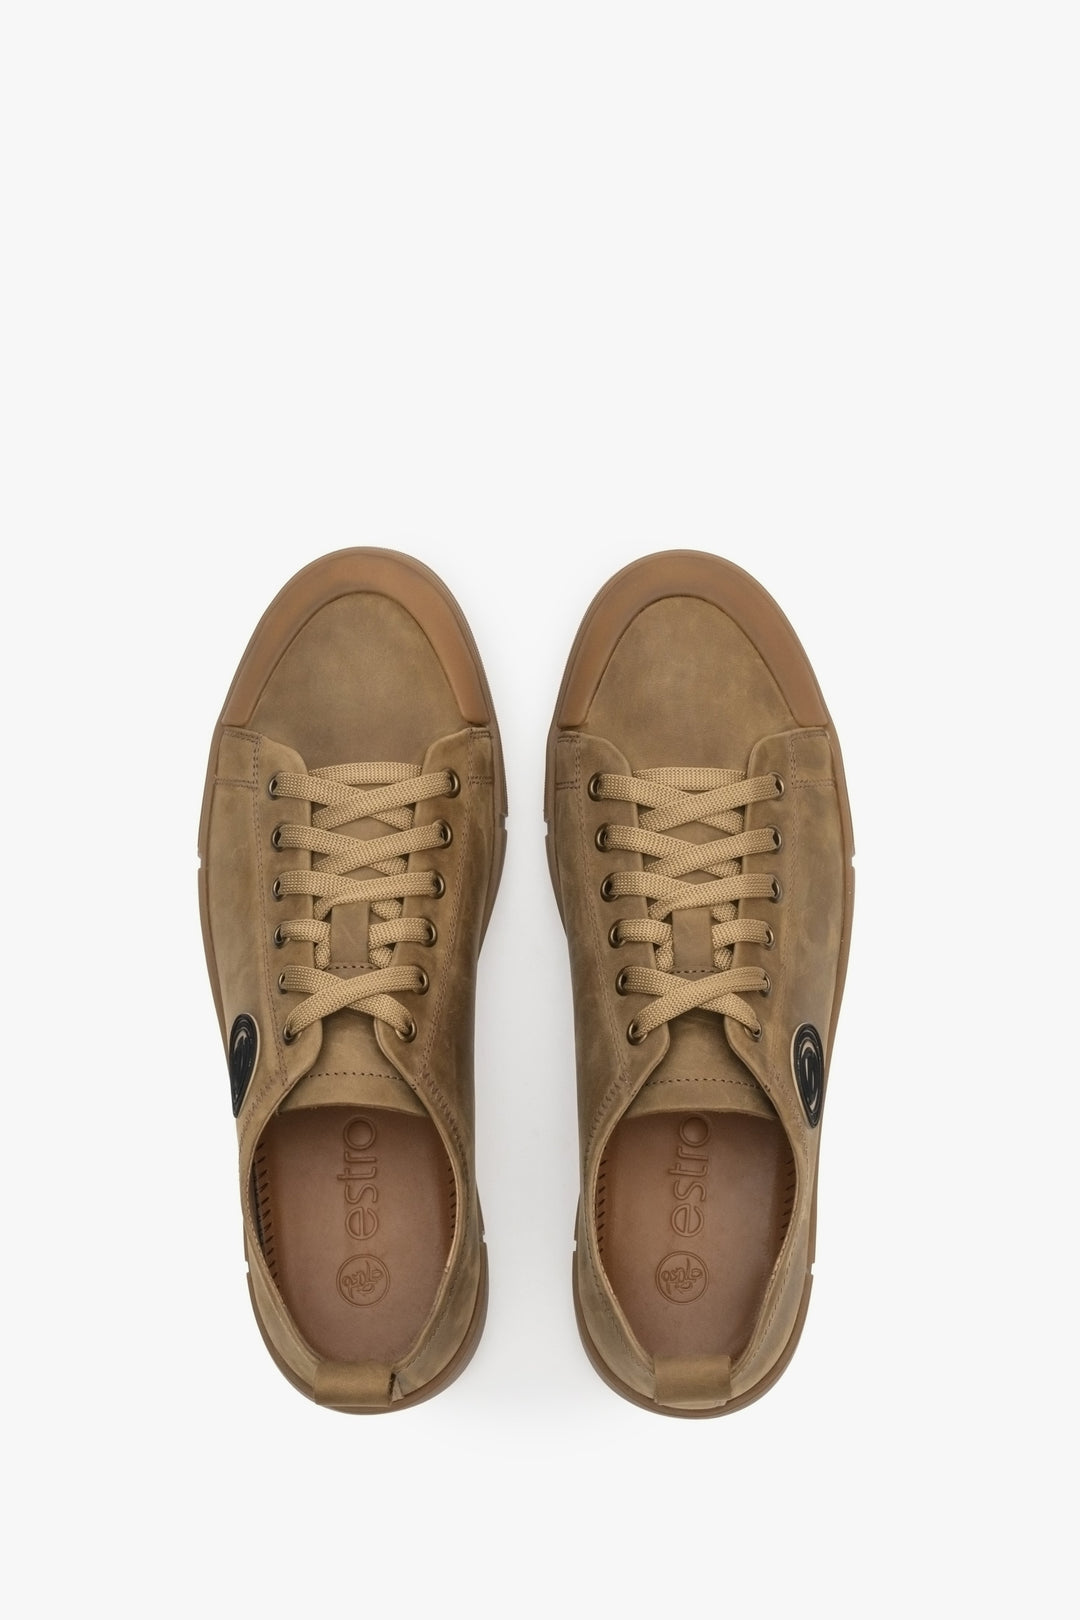 Estro men's sneakers in brown made of soft nubuck - top view presentation of the footwear.